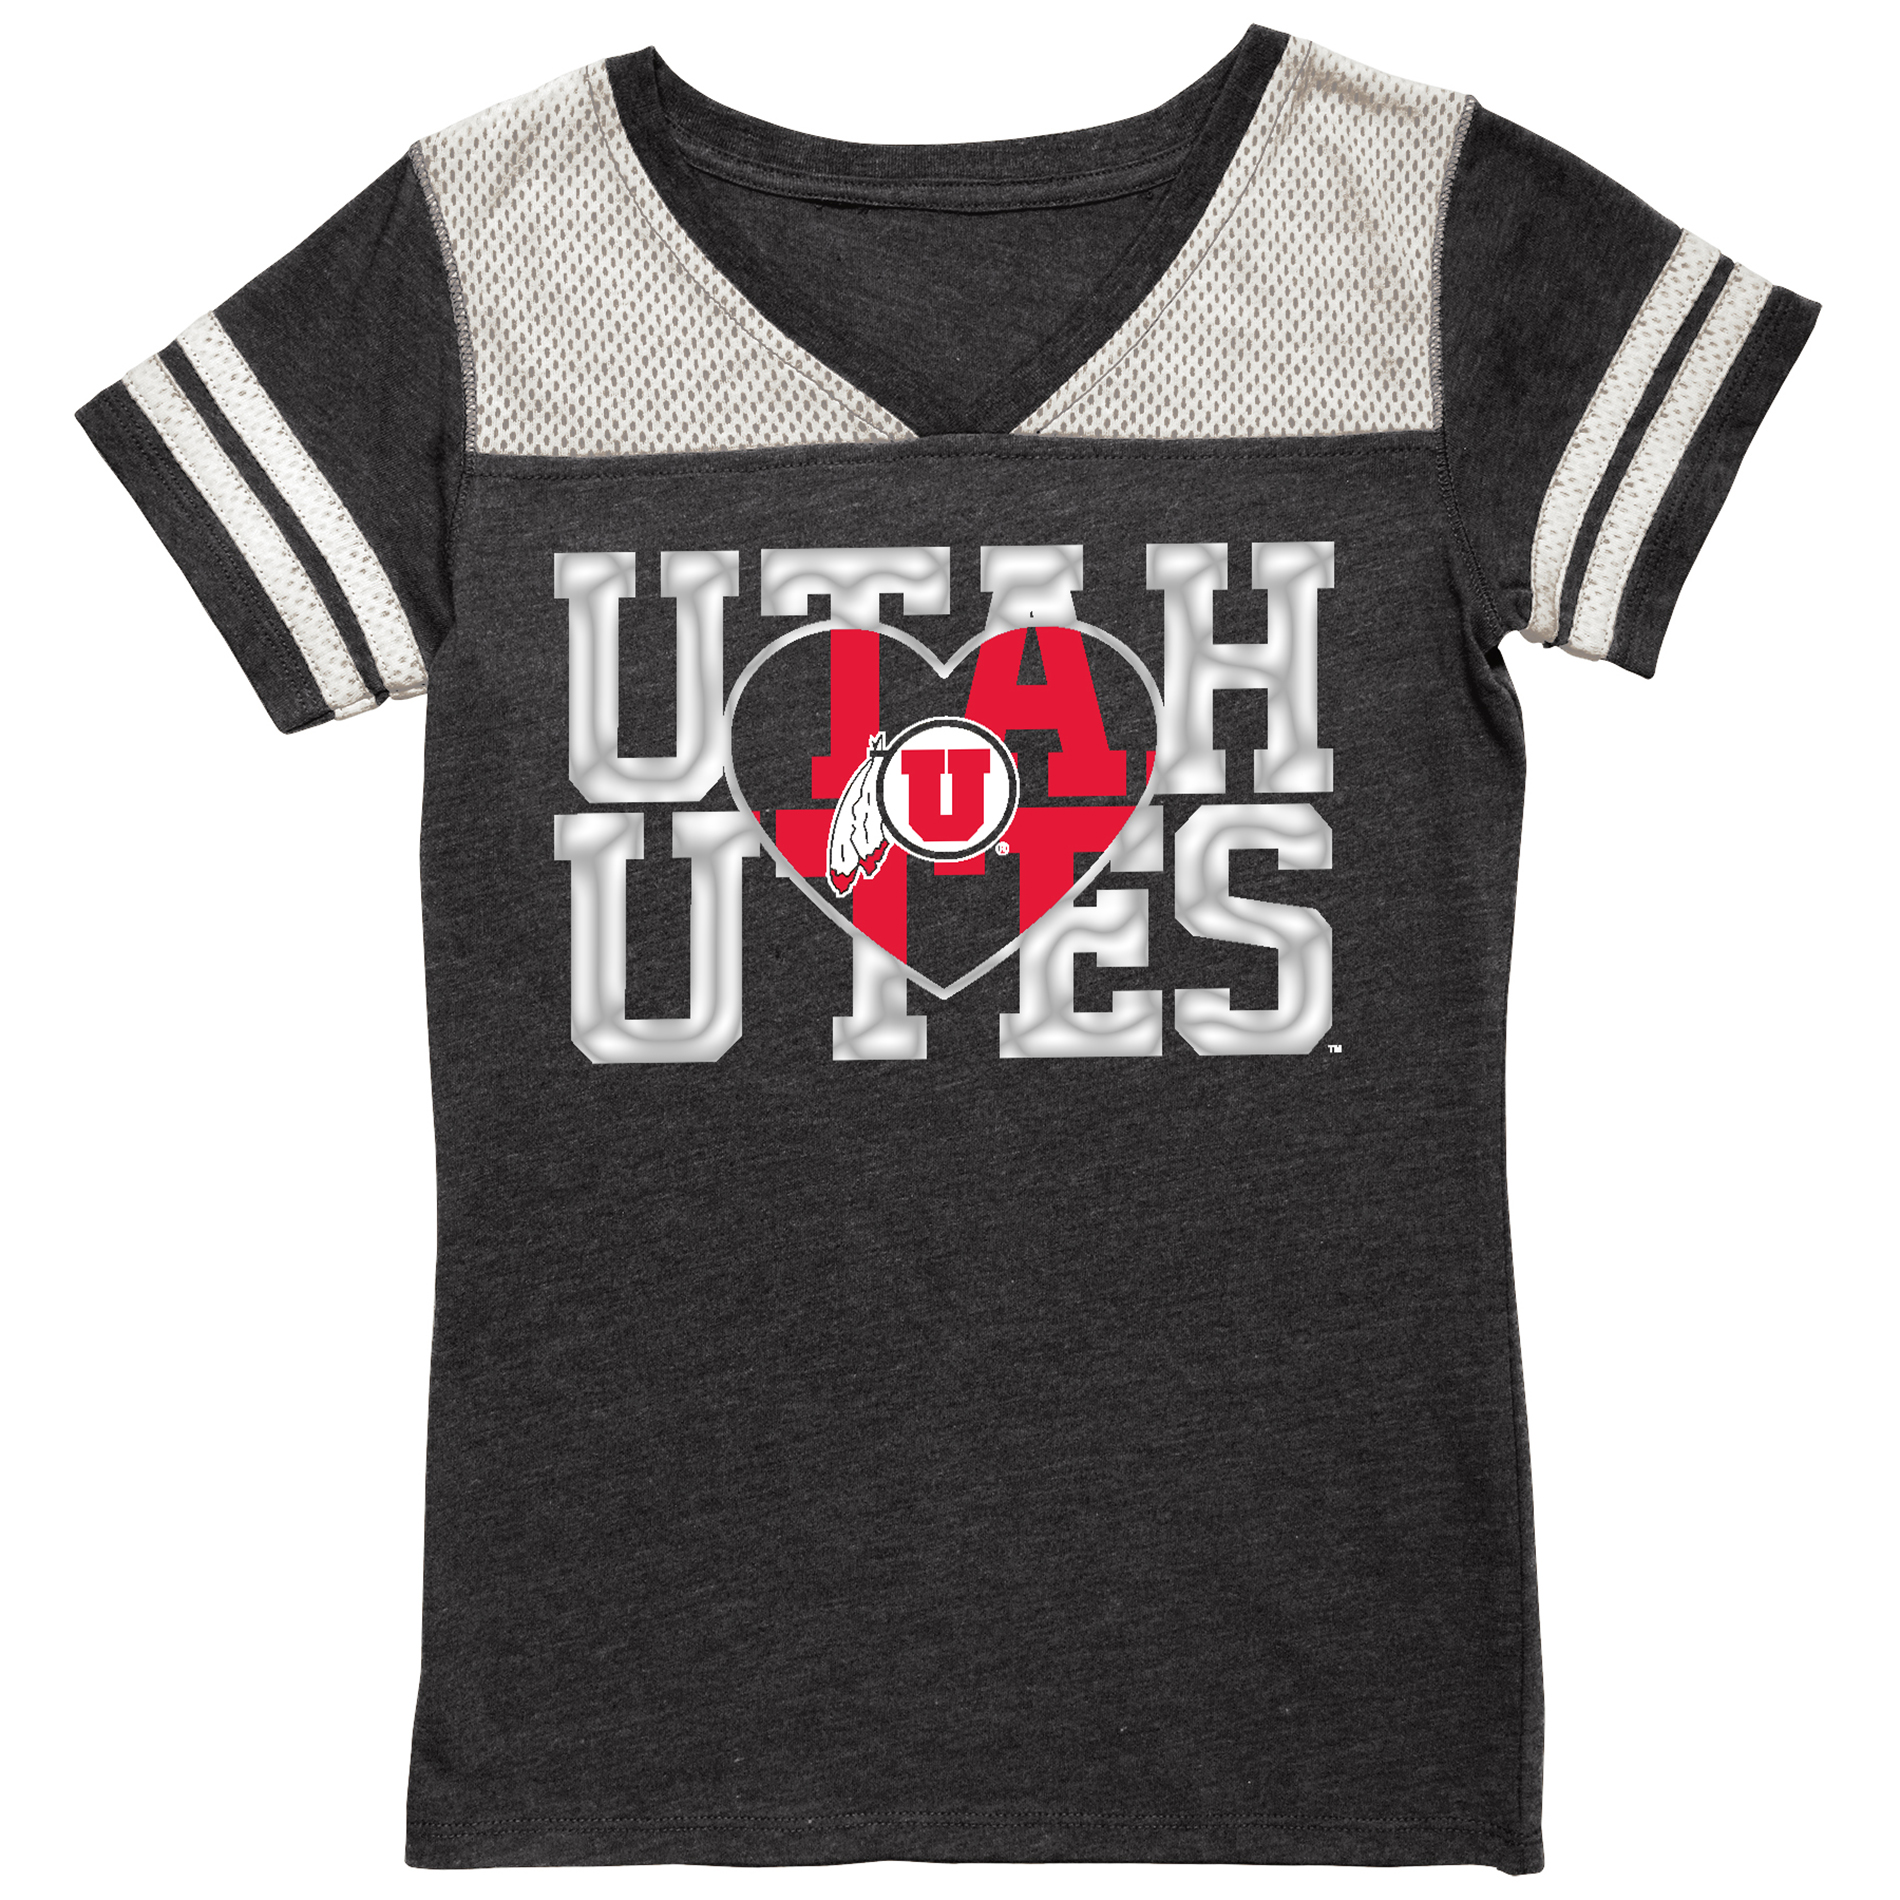 NCAA Girls' University of Utah Utes Foil Tee